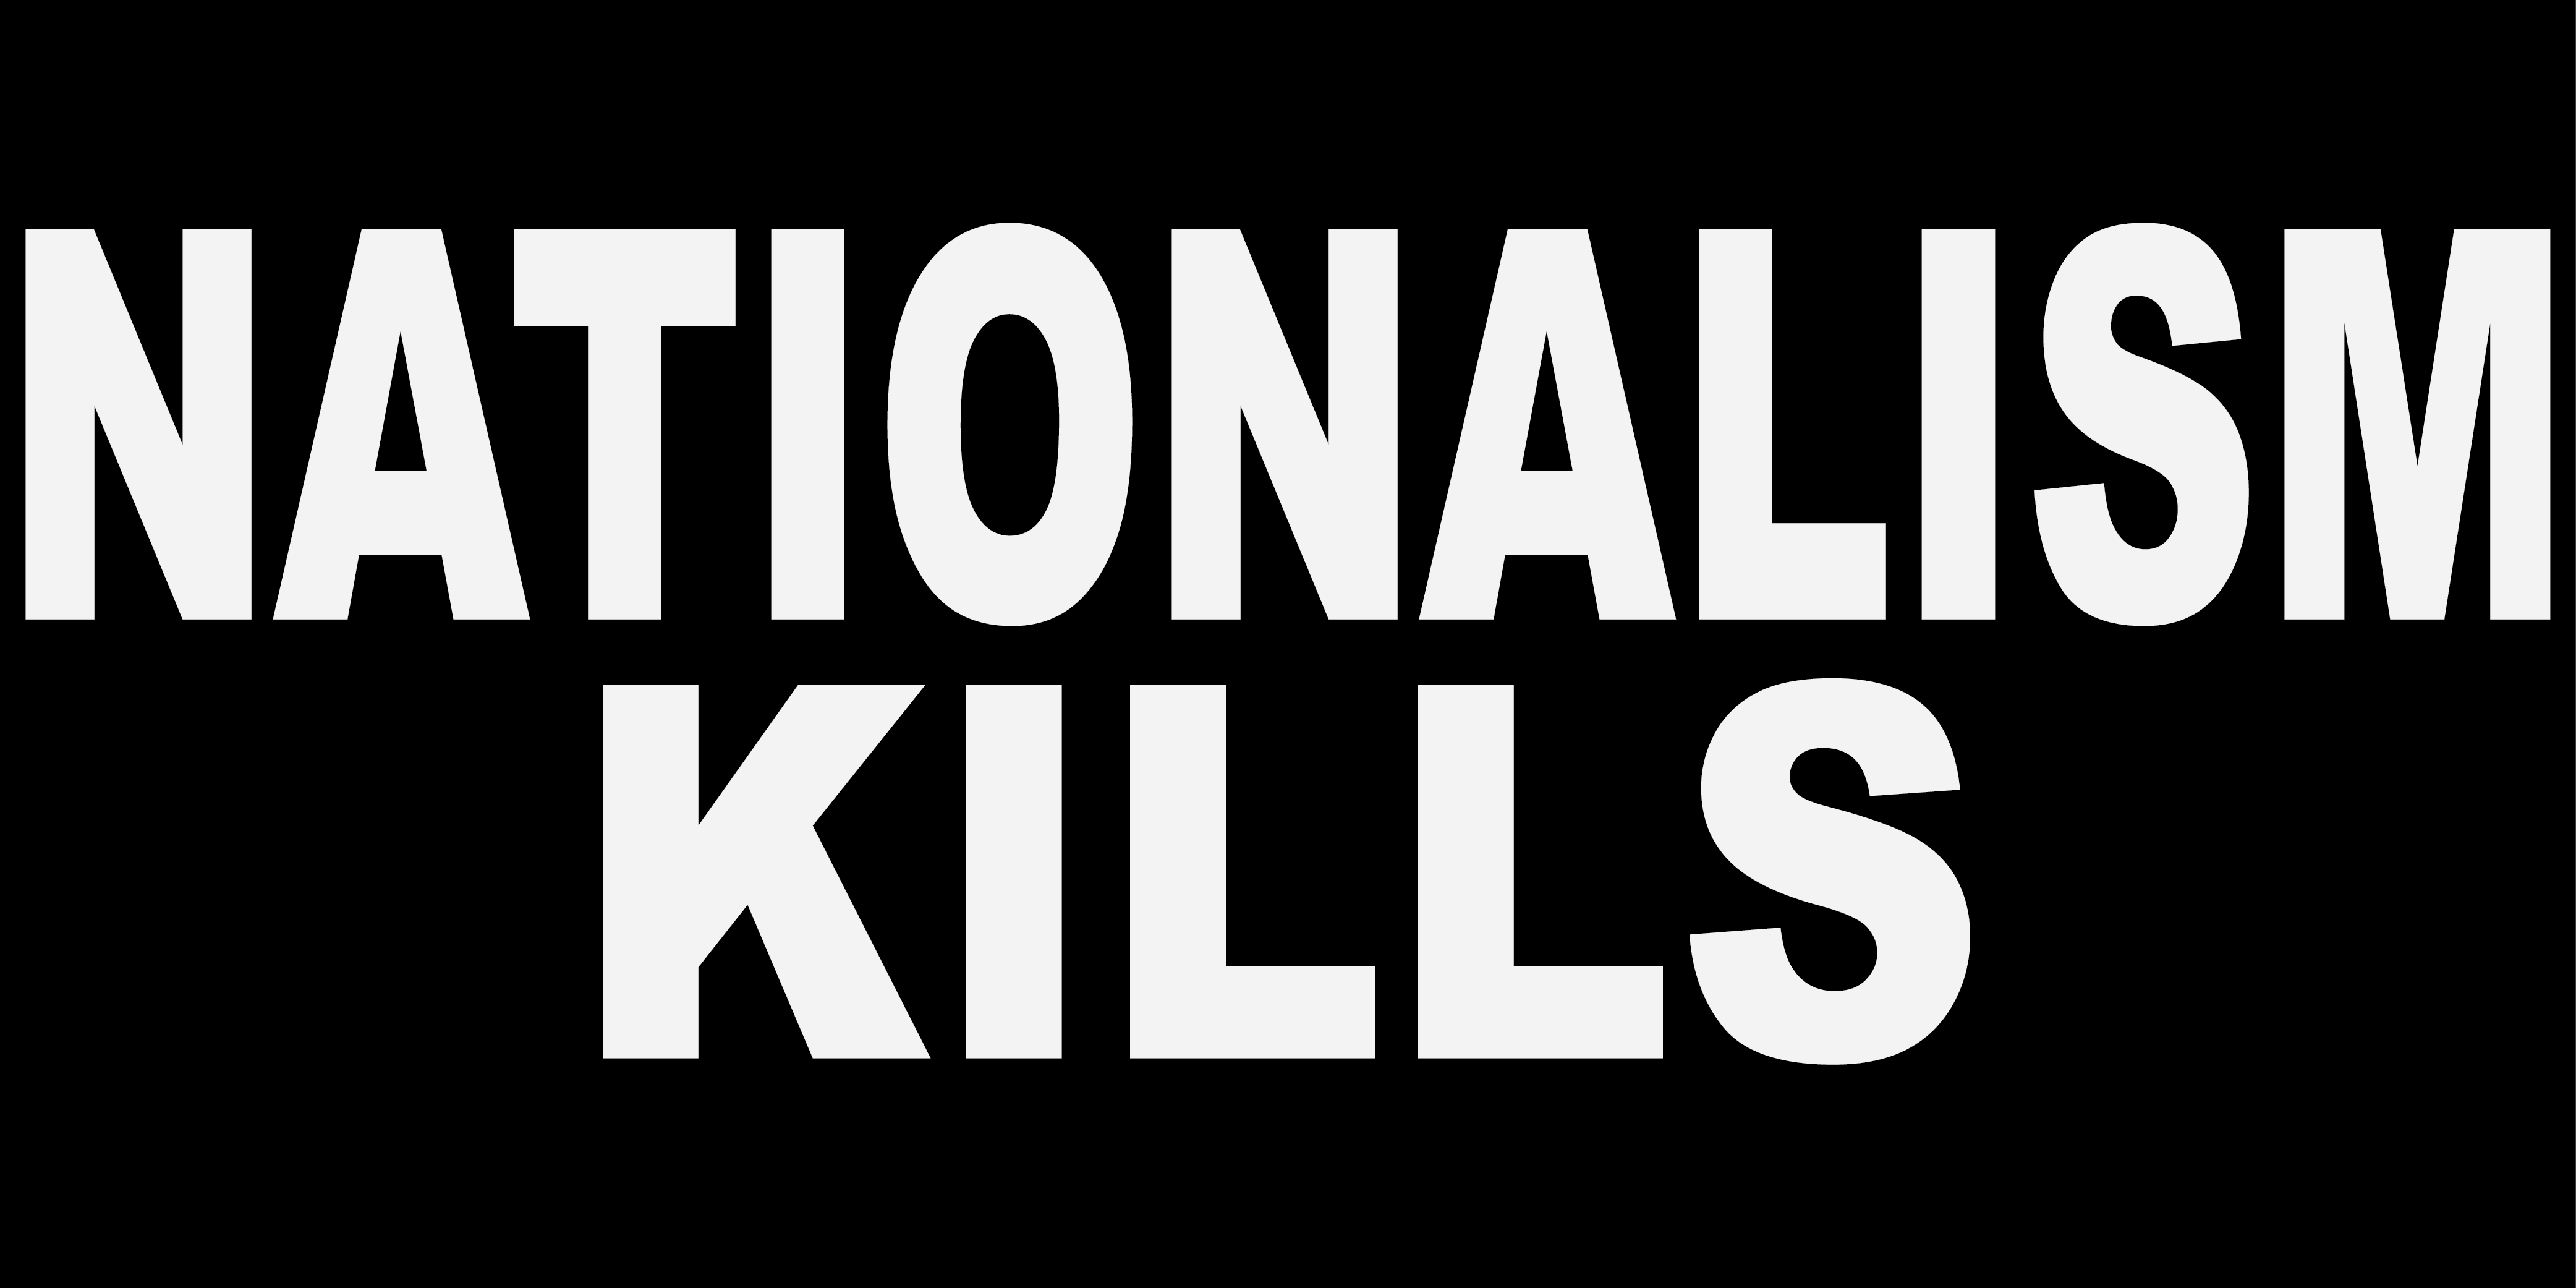 NATIONALISM KILLS